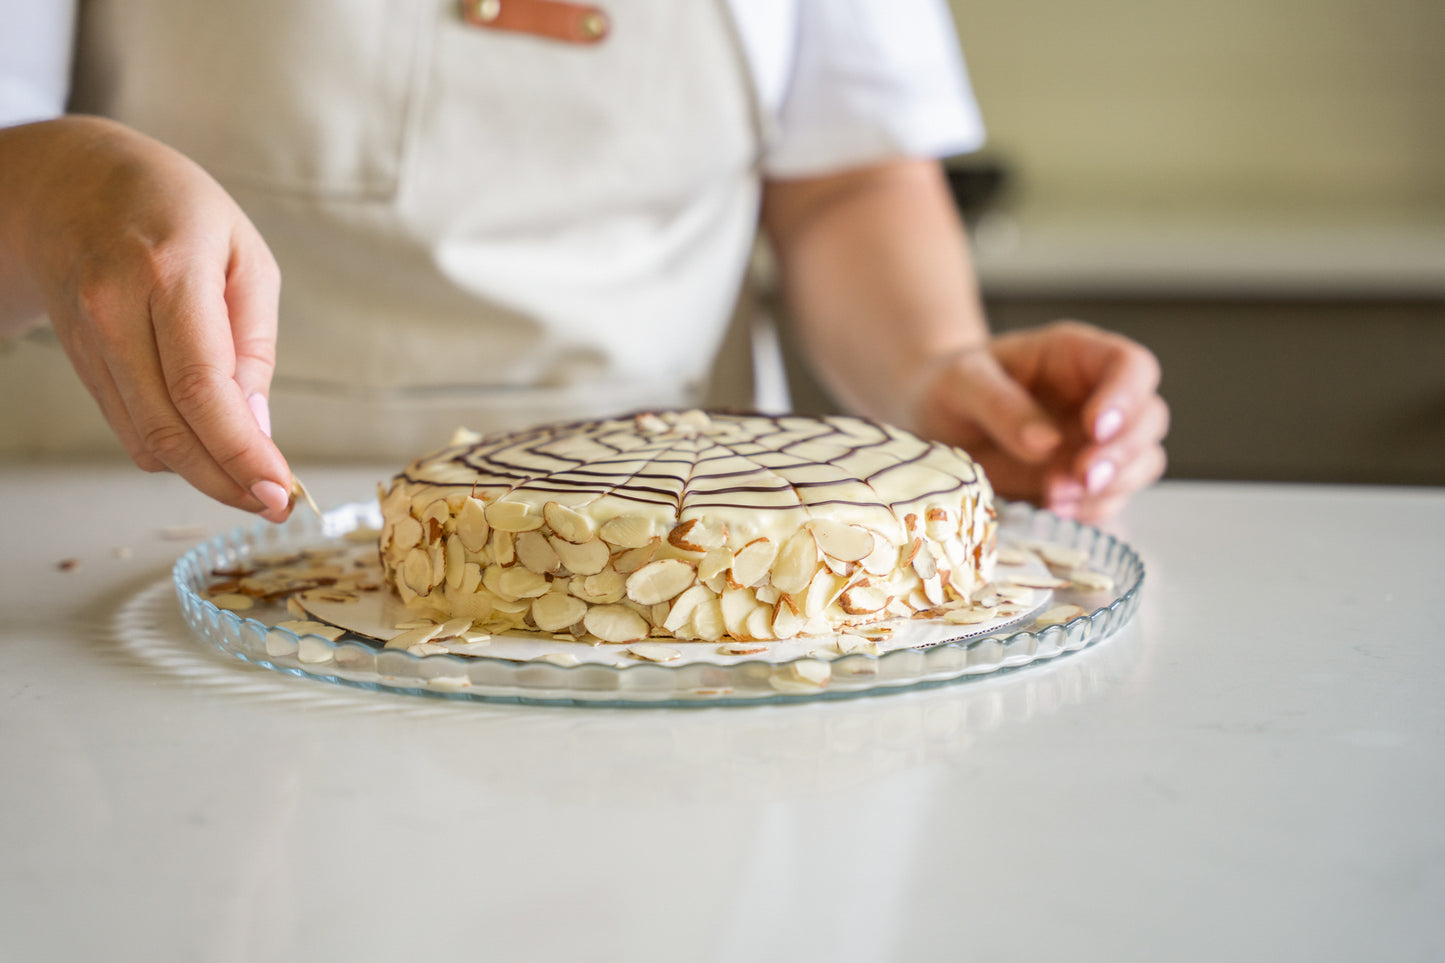 Gluten-Free Esterhazy Cake (8 inch) Contains Nuts